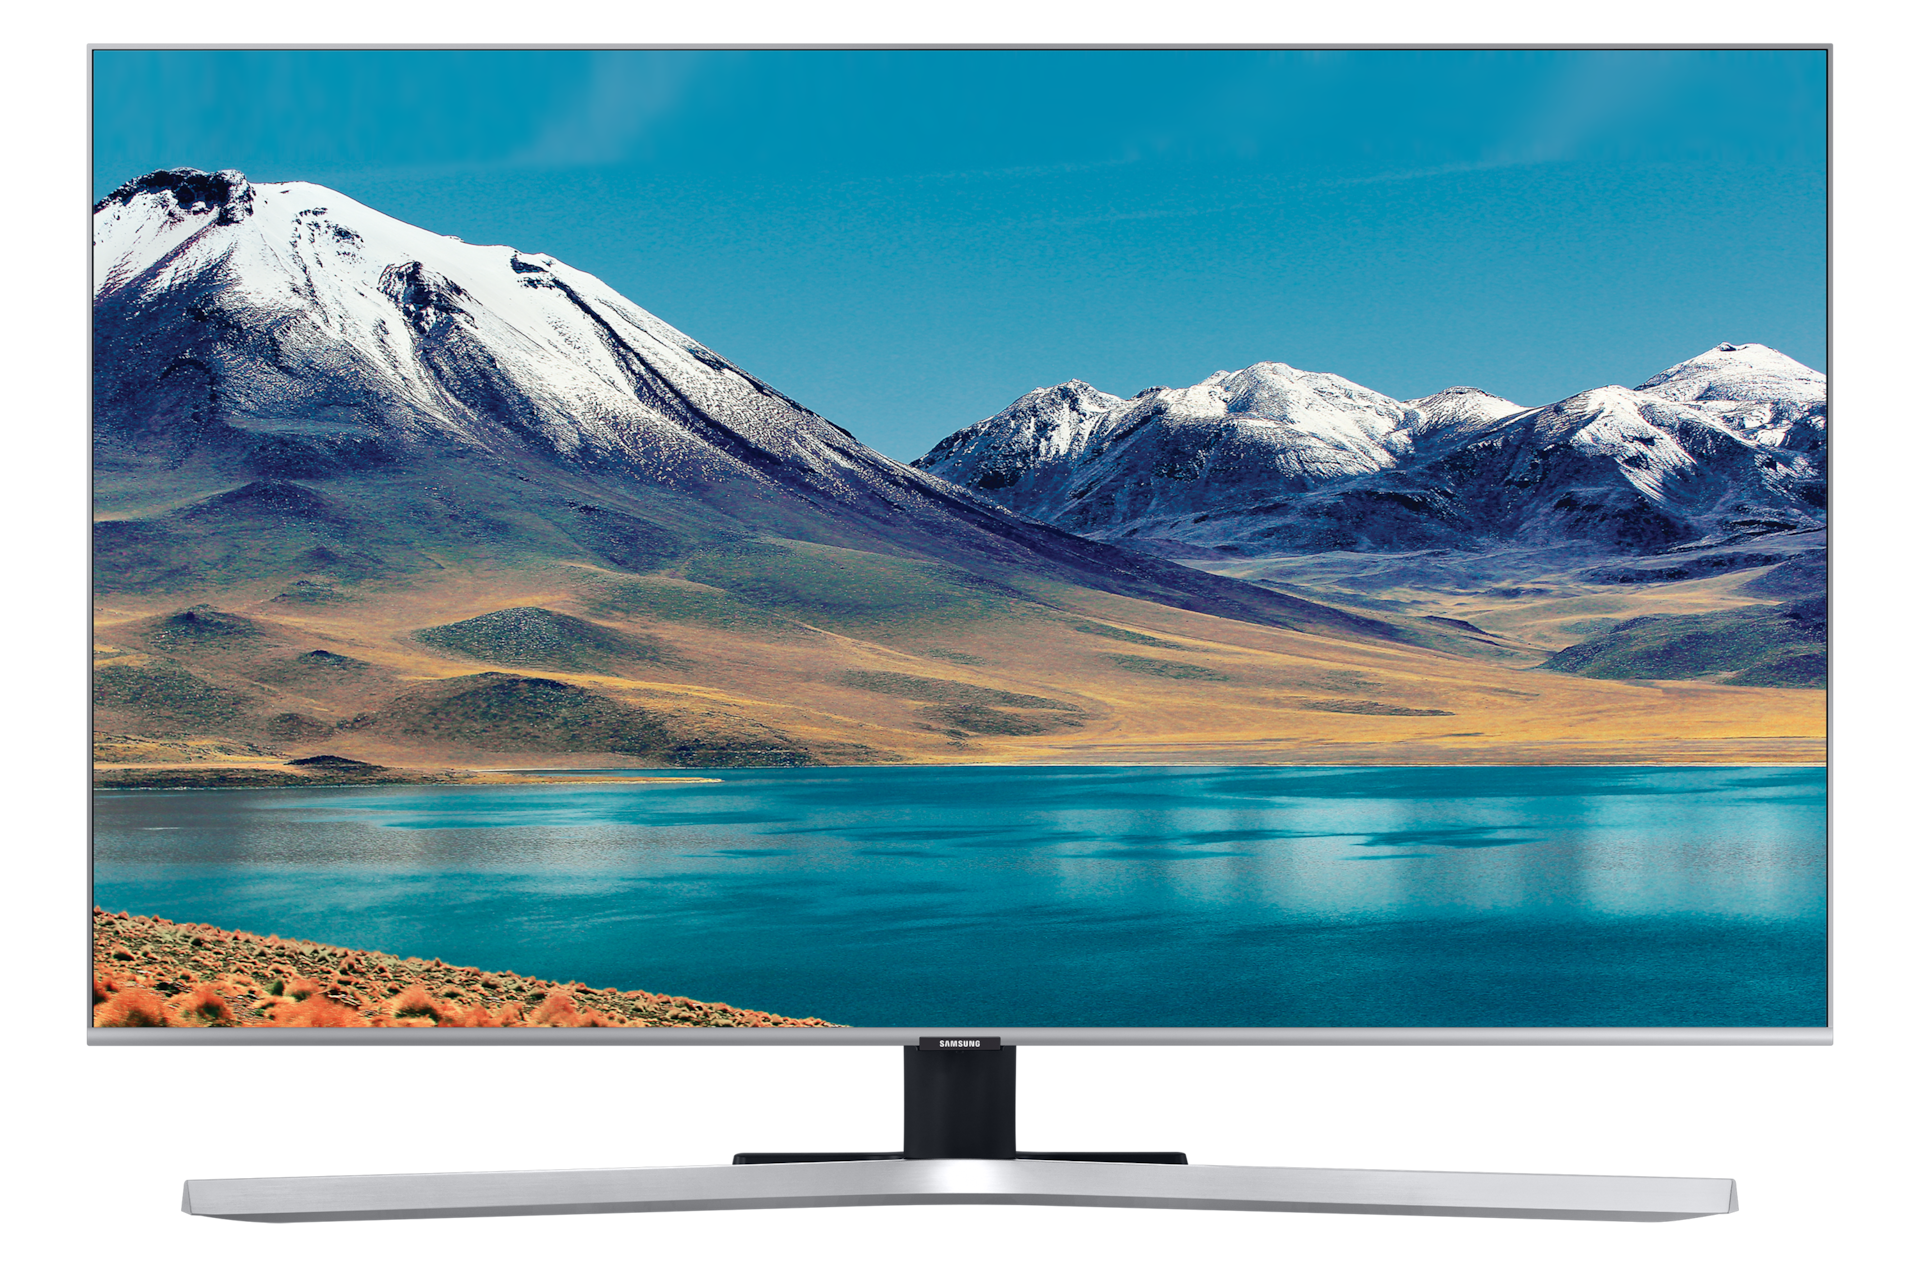 Él De Dios taburete 50" TU8500 Crystal UHD 4K Smart TV 2020 | Samsung Caribbean